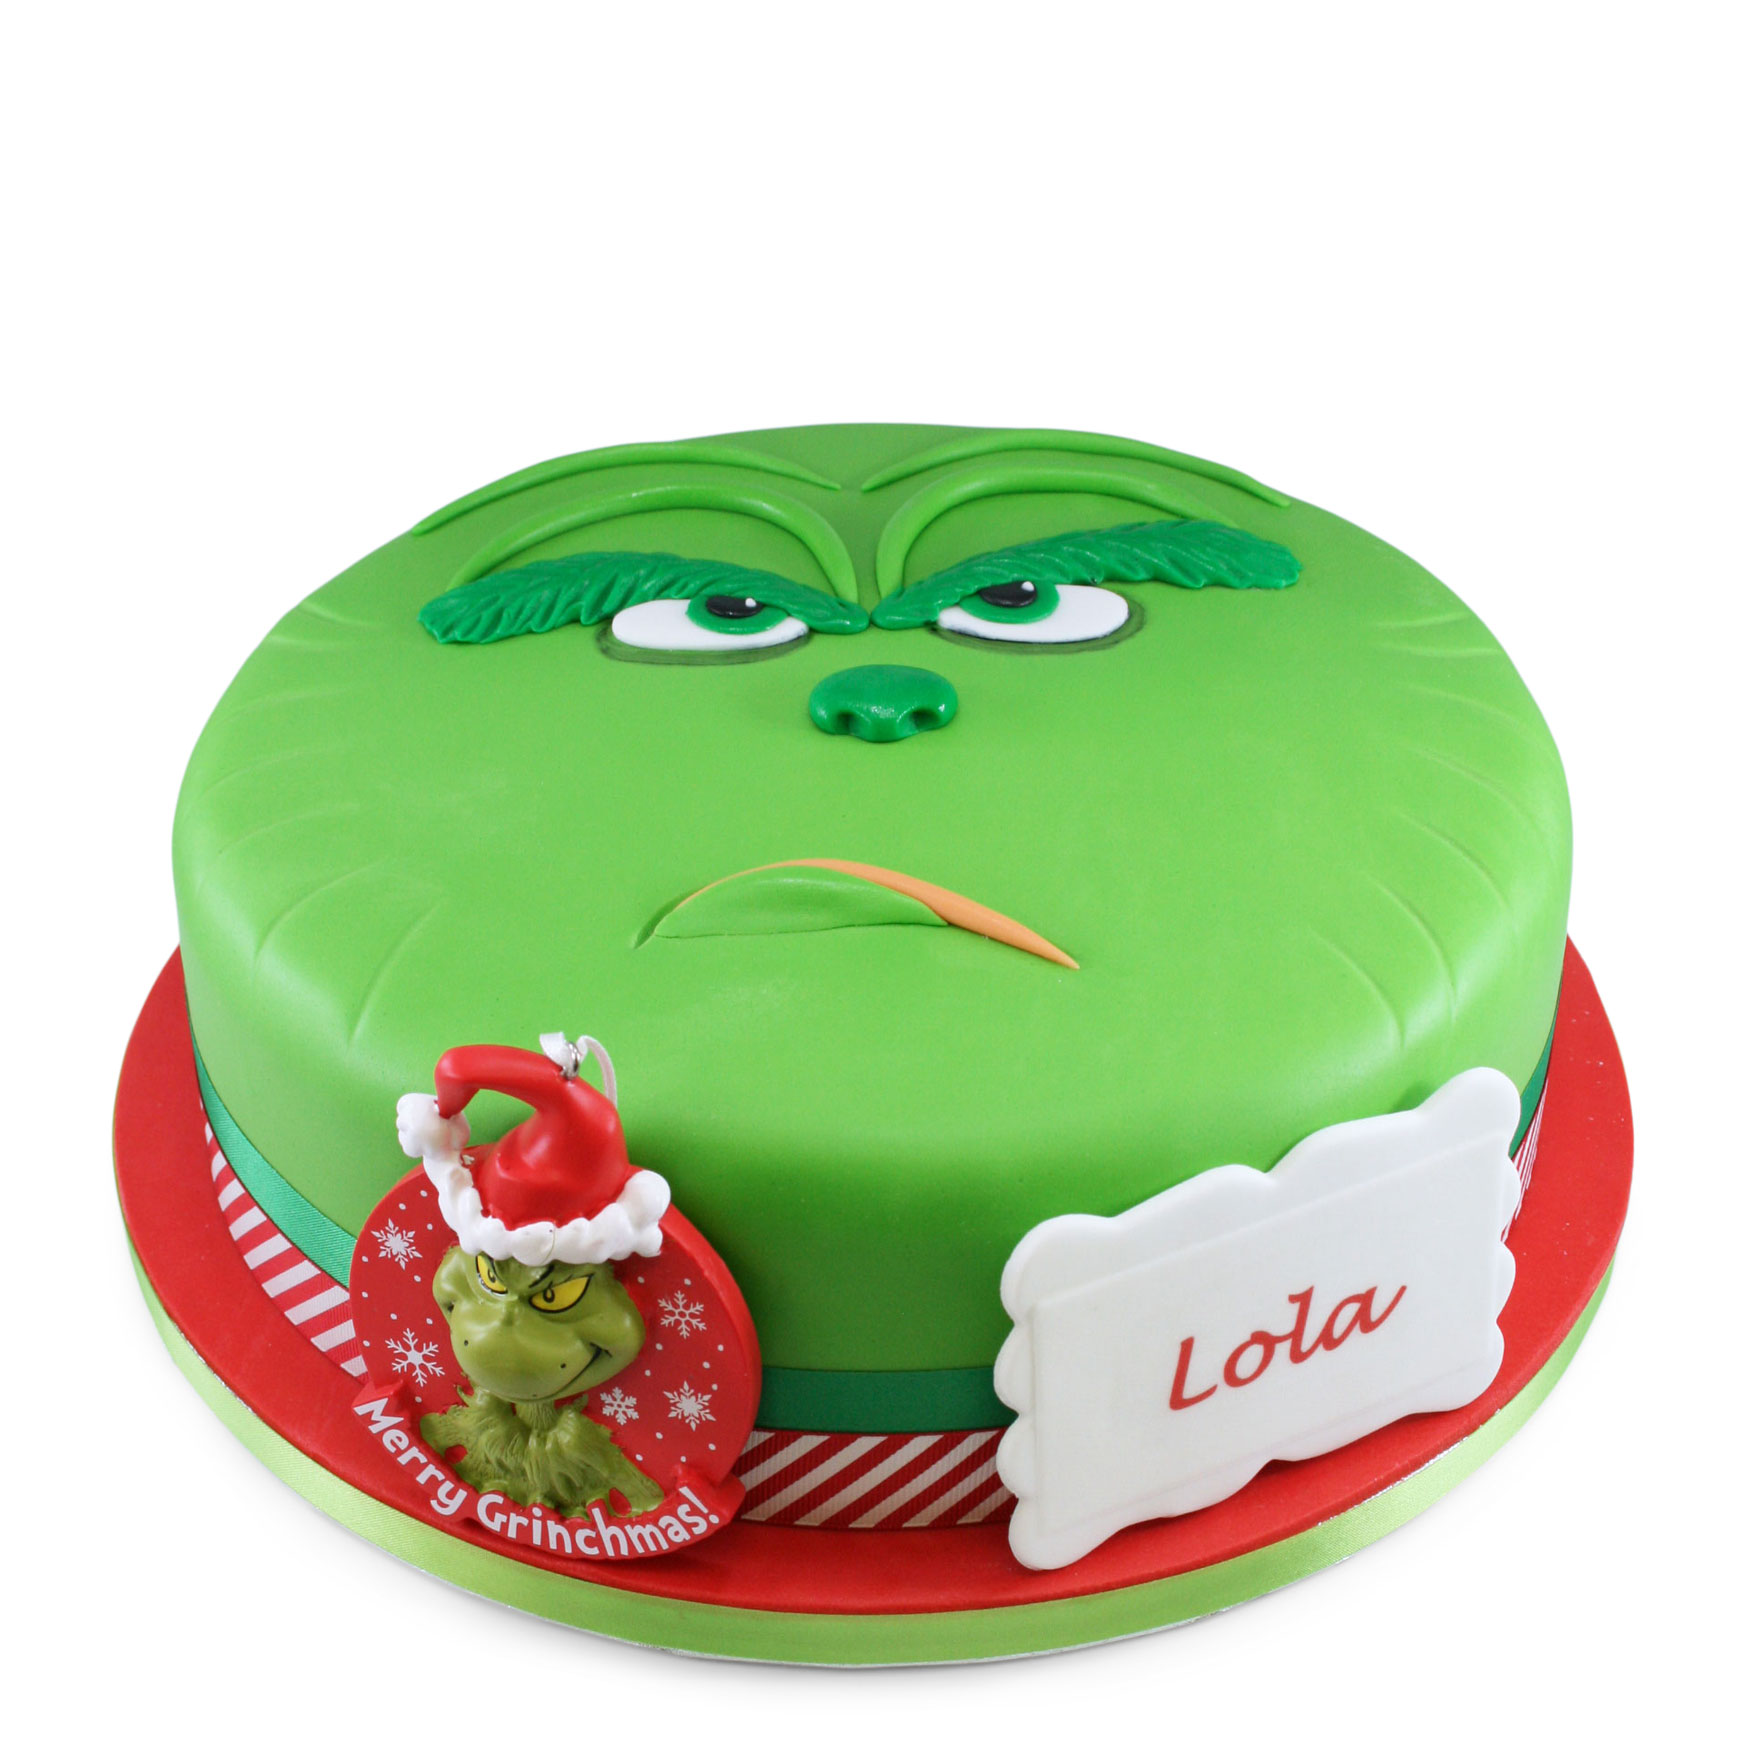 Little Lola | Cake, Birthday cake kids, Lola